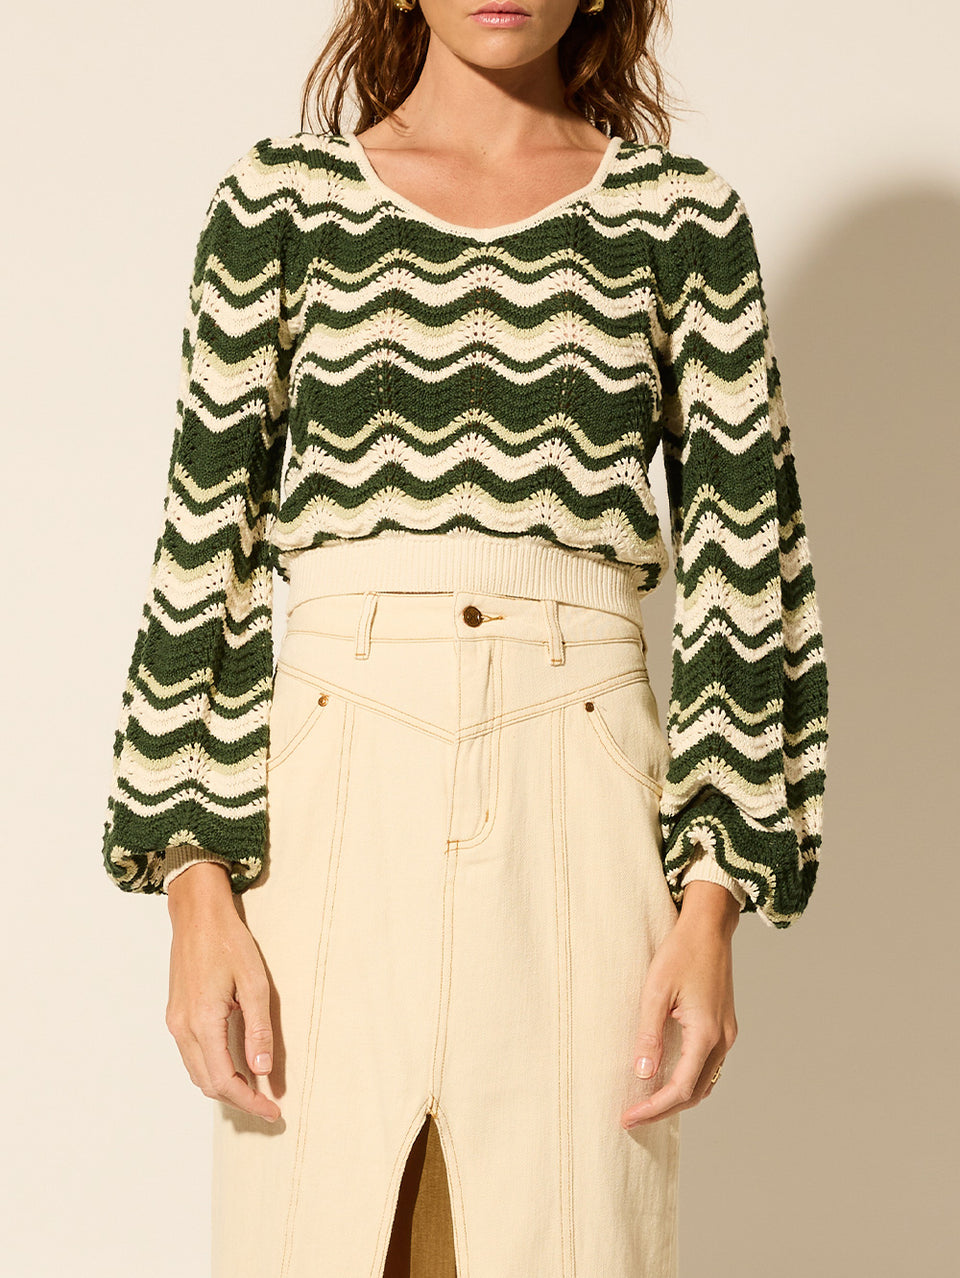 Marcella Knit Top KIVARI | Model wears green and cream knit top close up